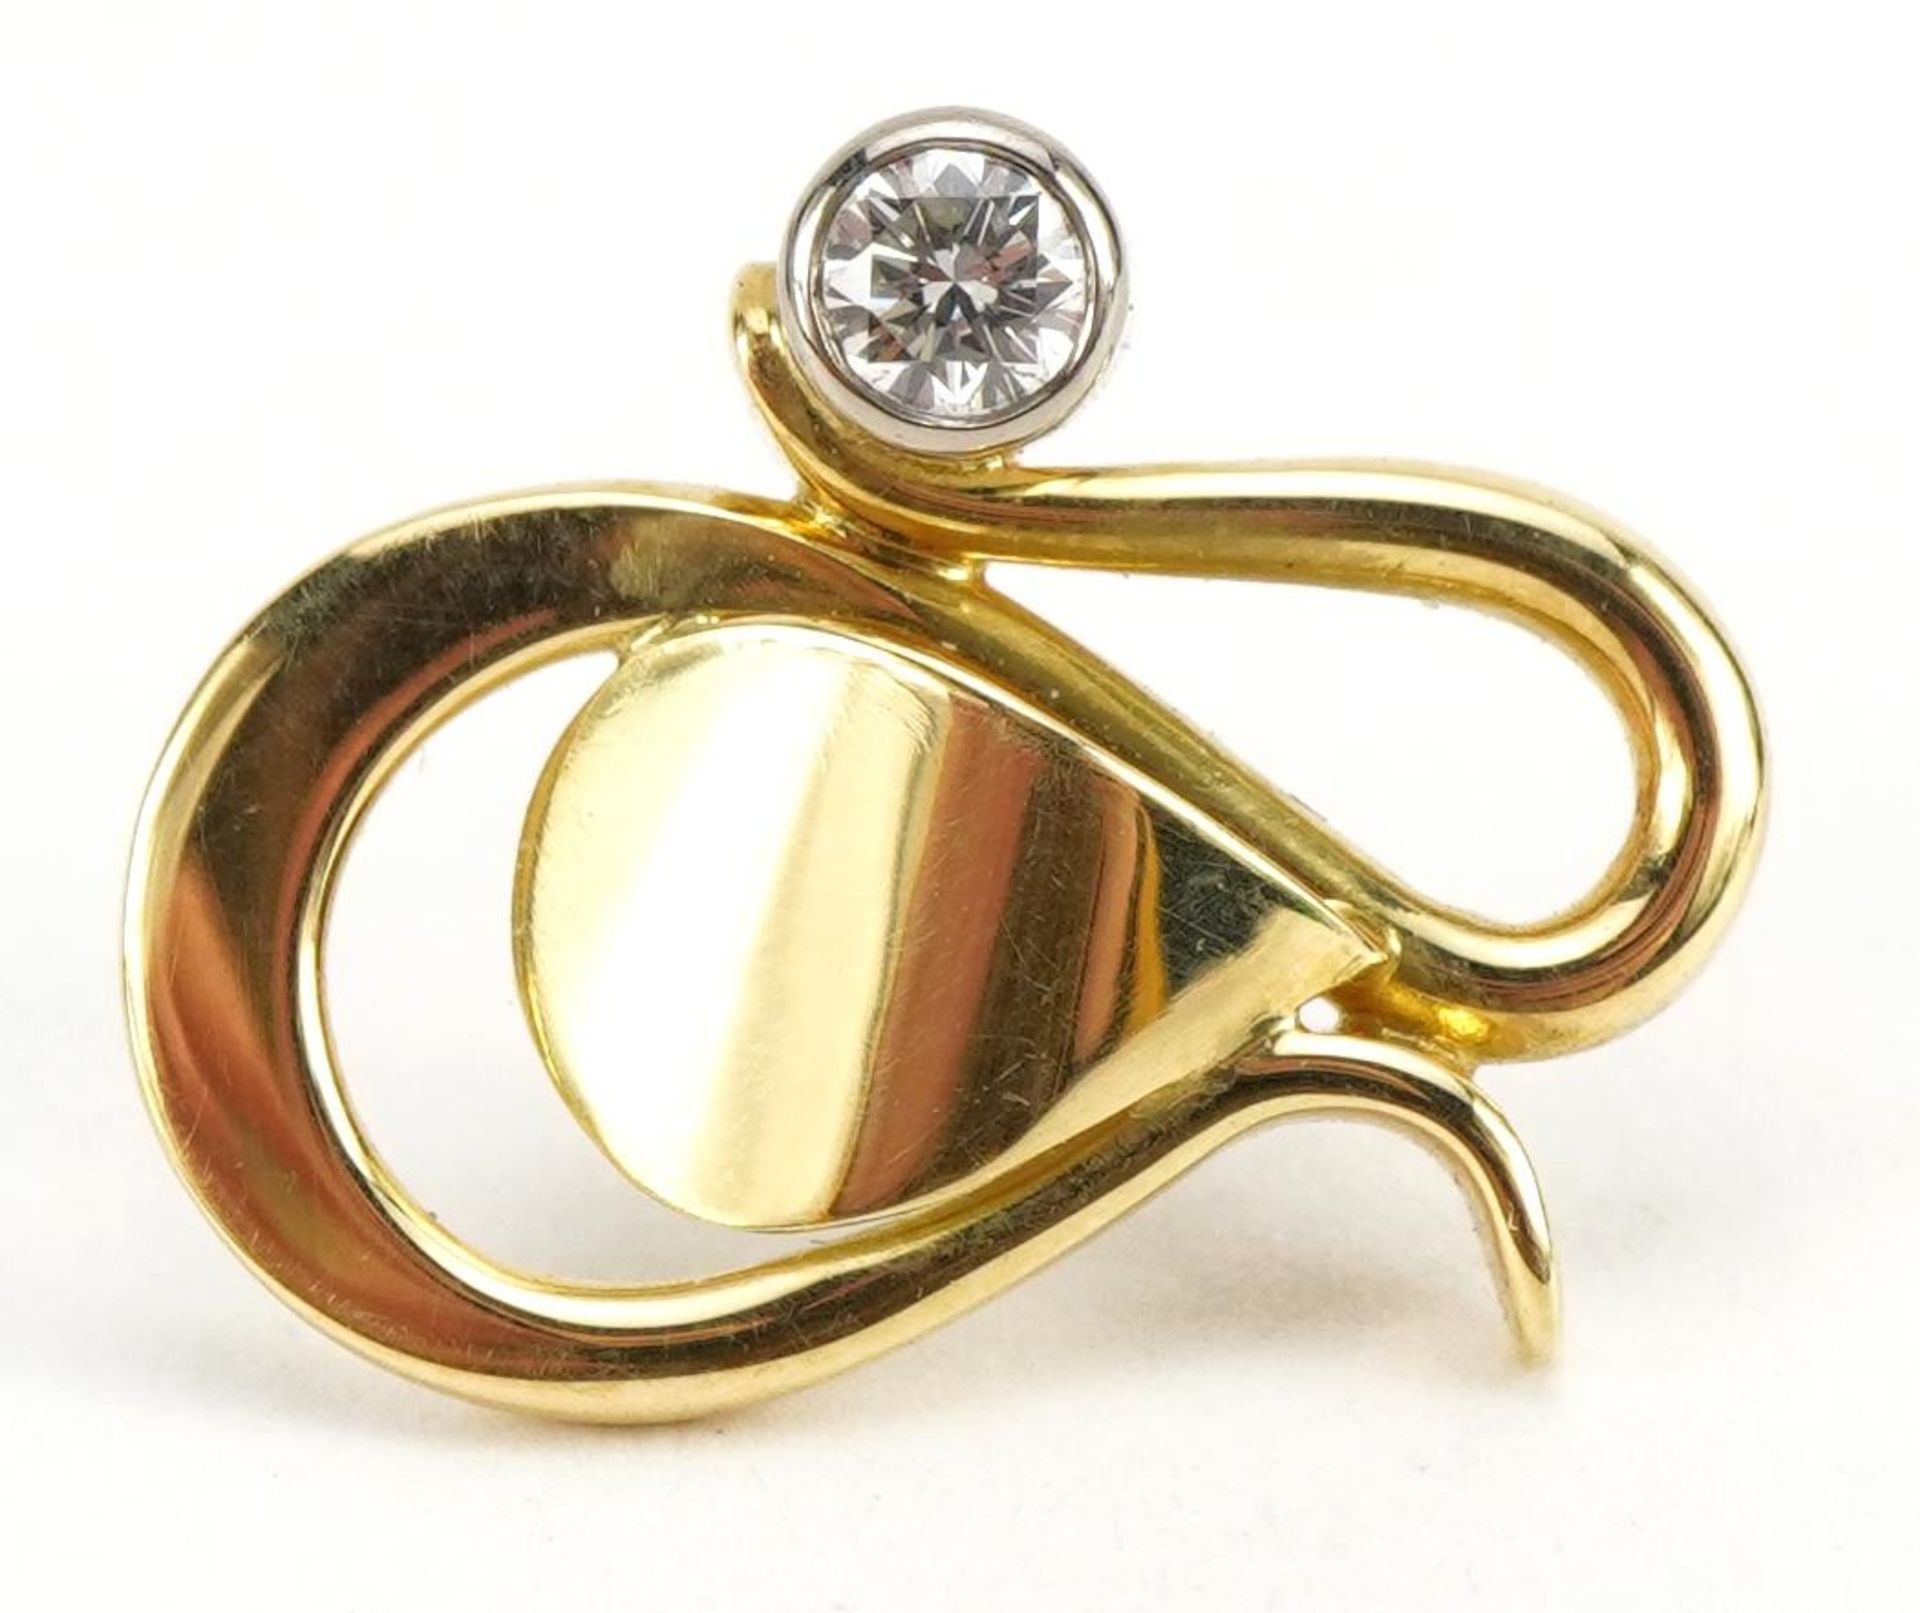 Modernist 18ct gold diamond solitaire stud earring, the diamond 3.00mm in diameter, 1.6cm high, 2.0g